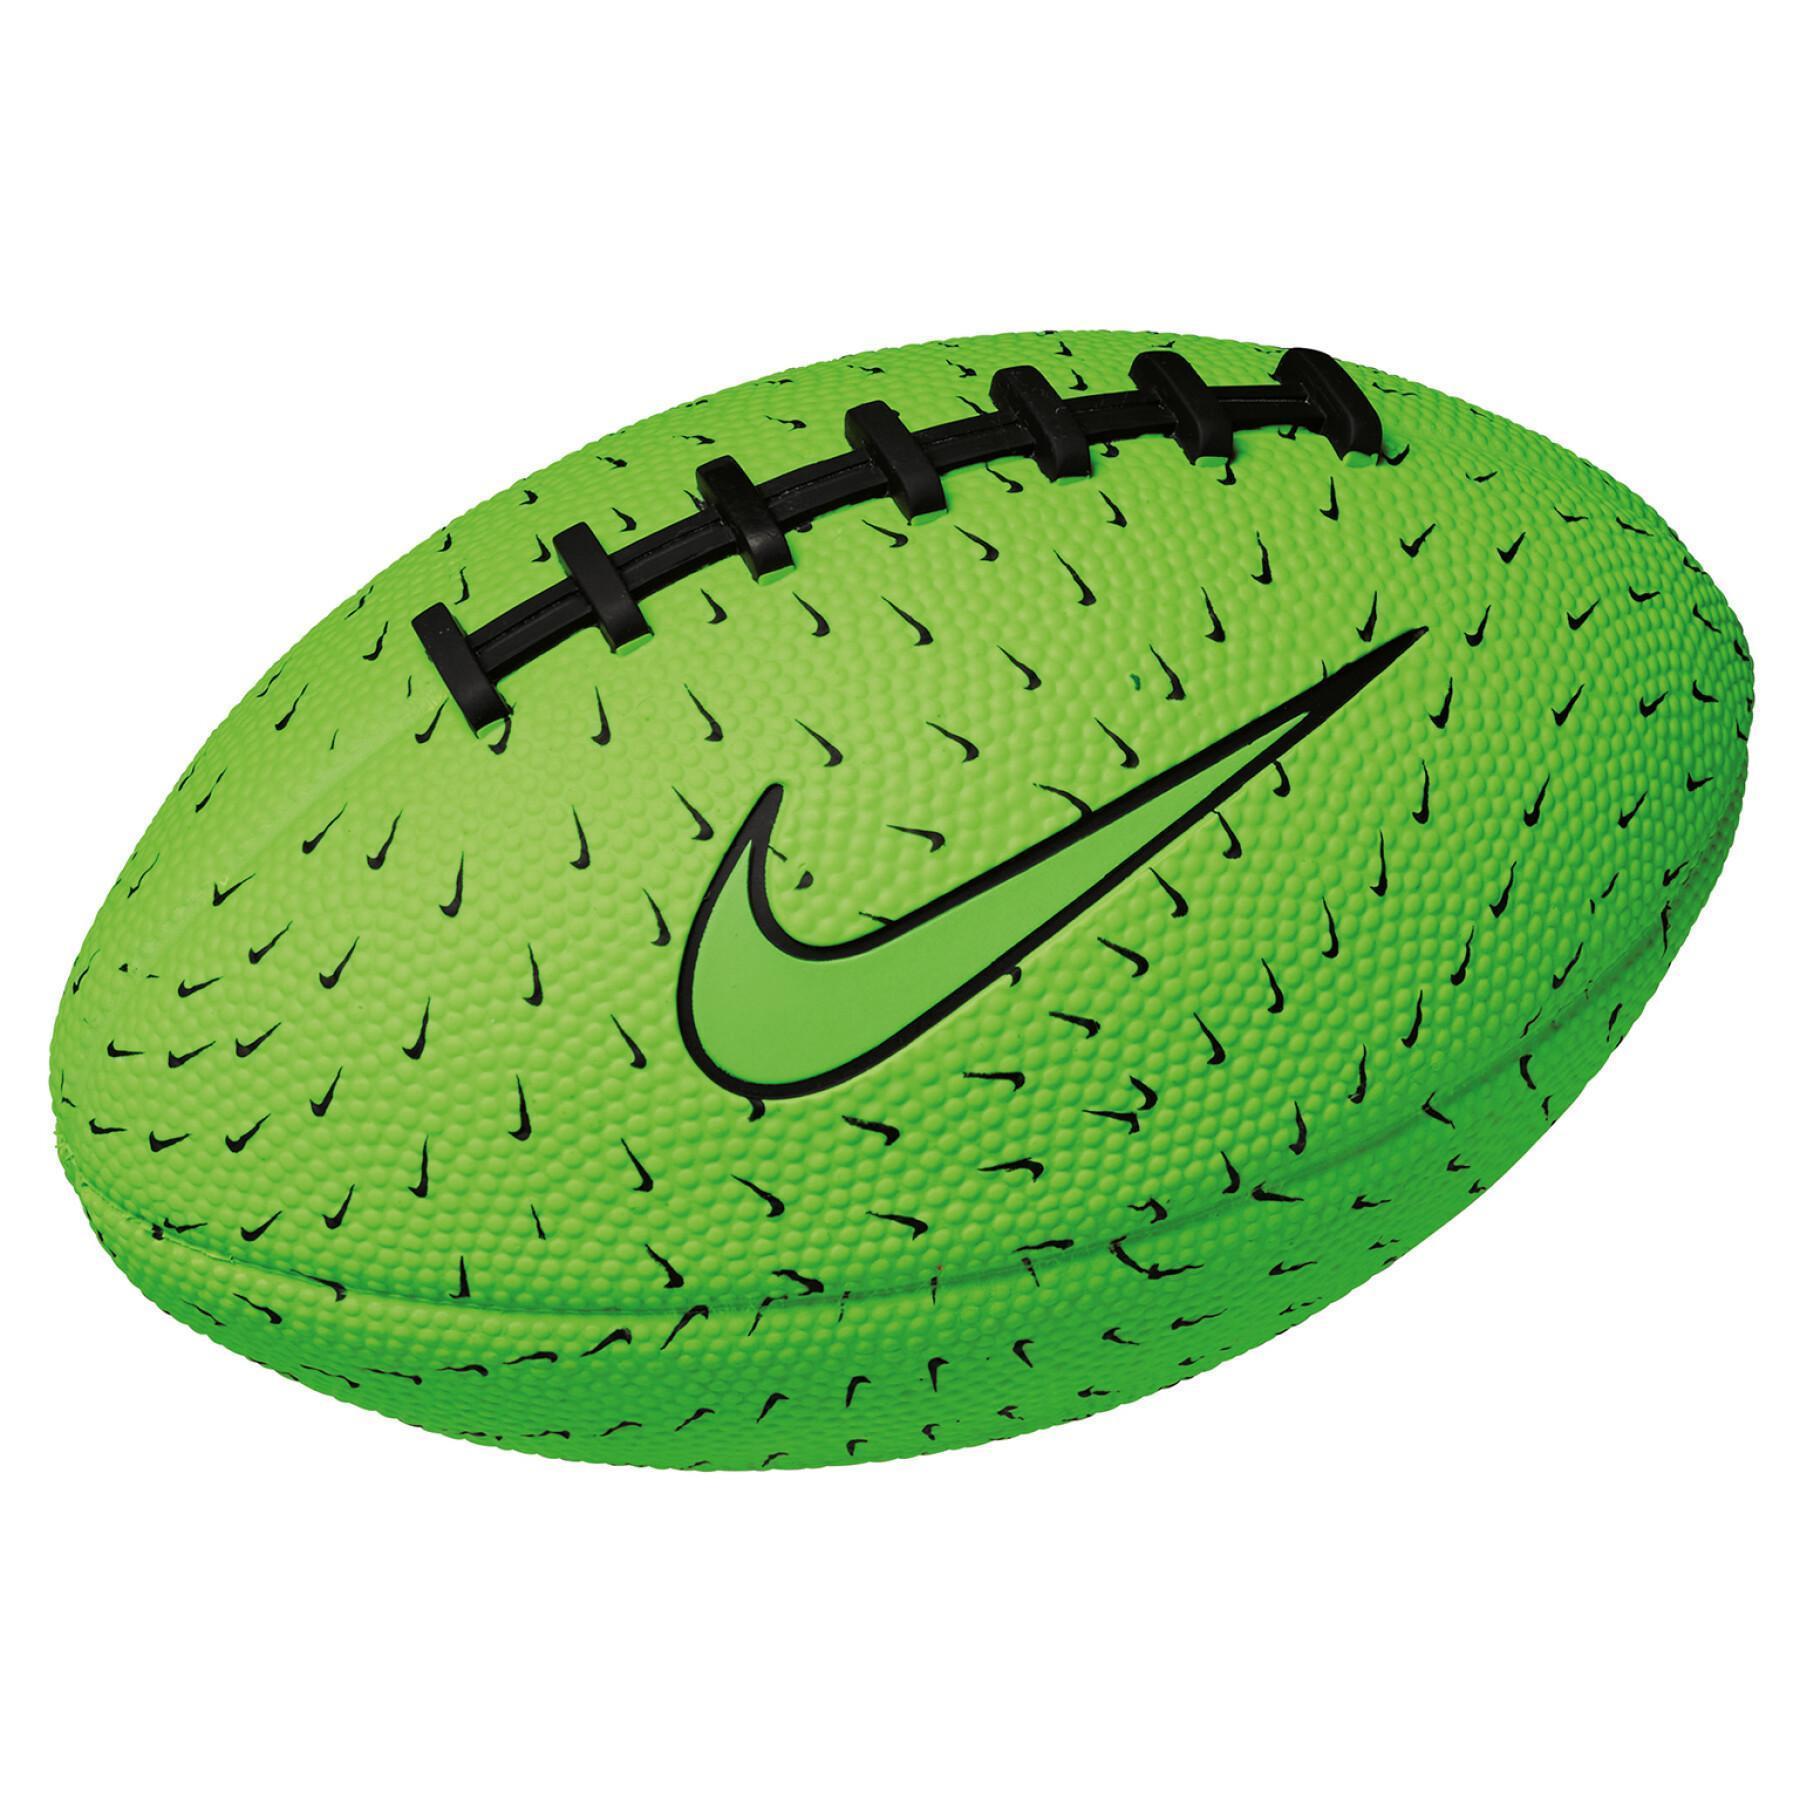 Balón Nike Playground FB Mini desinflado